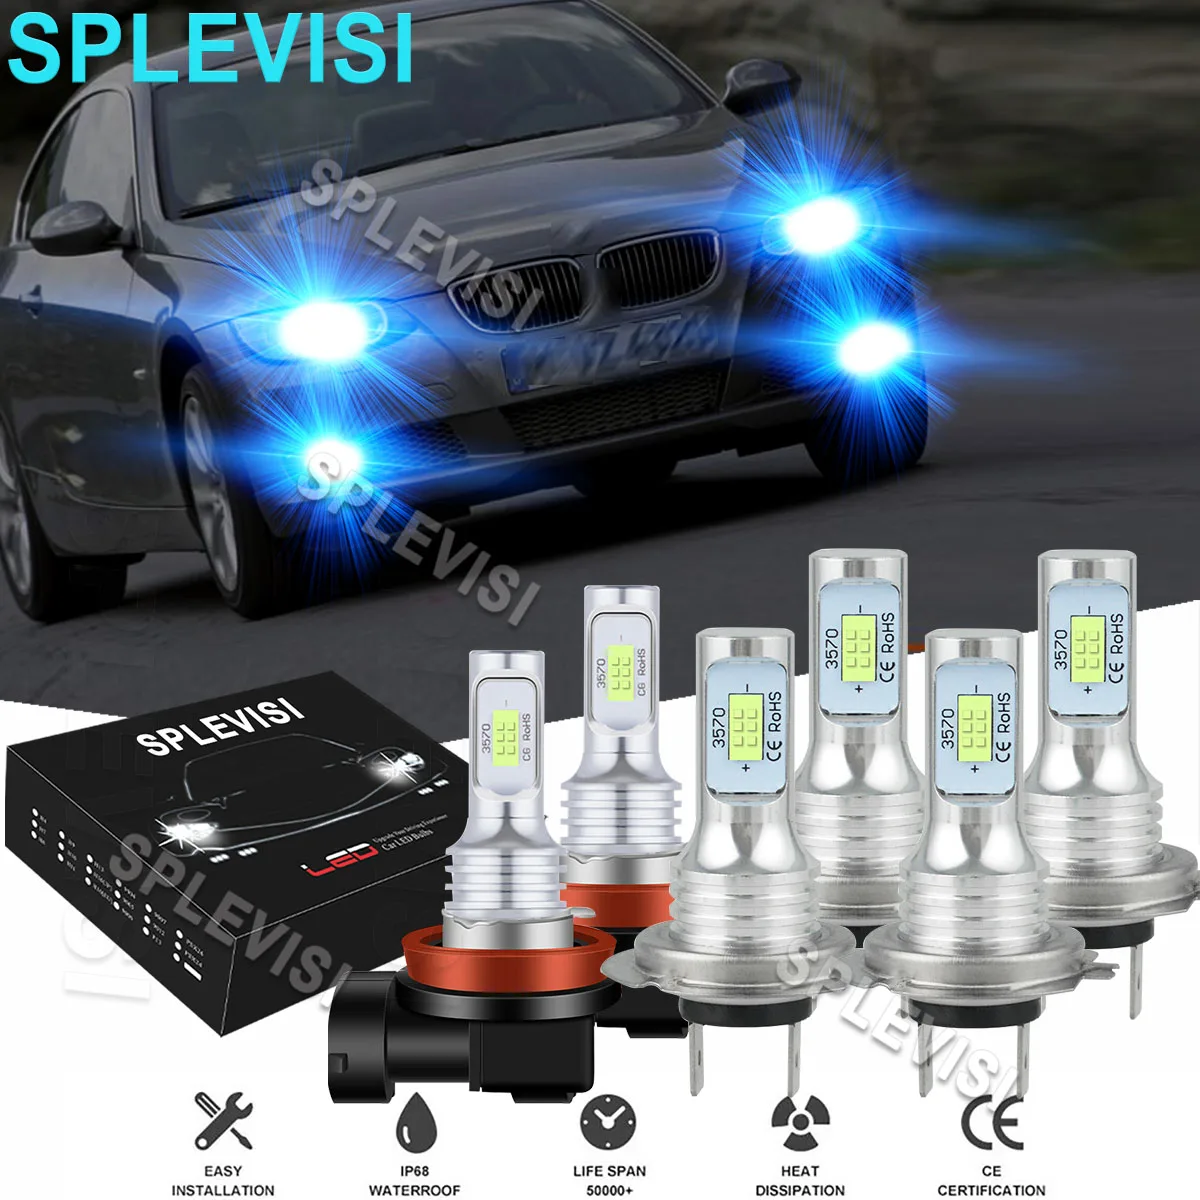 

LED Ice Blue Headlight Fog Light Bulbs Fit For BMW 328xi 335xi 2007 2008 BMW X3 2011-2014 BMW X1 2012-2018 320i 330i 340i